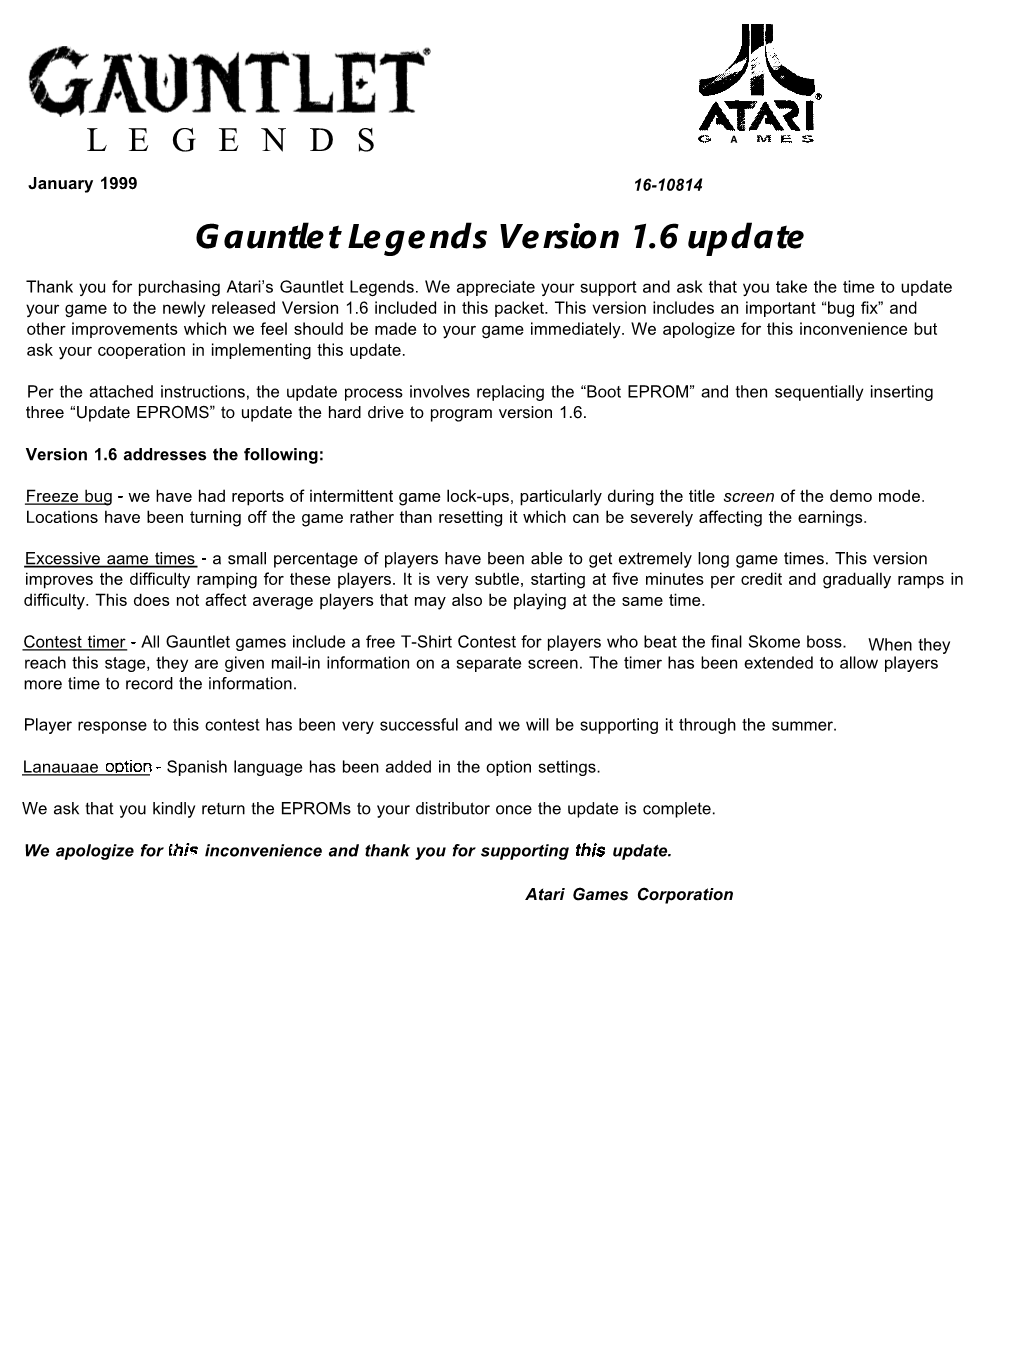 L E G E N D S Gauntlet Legends Version 1.6 Update